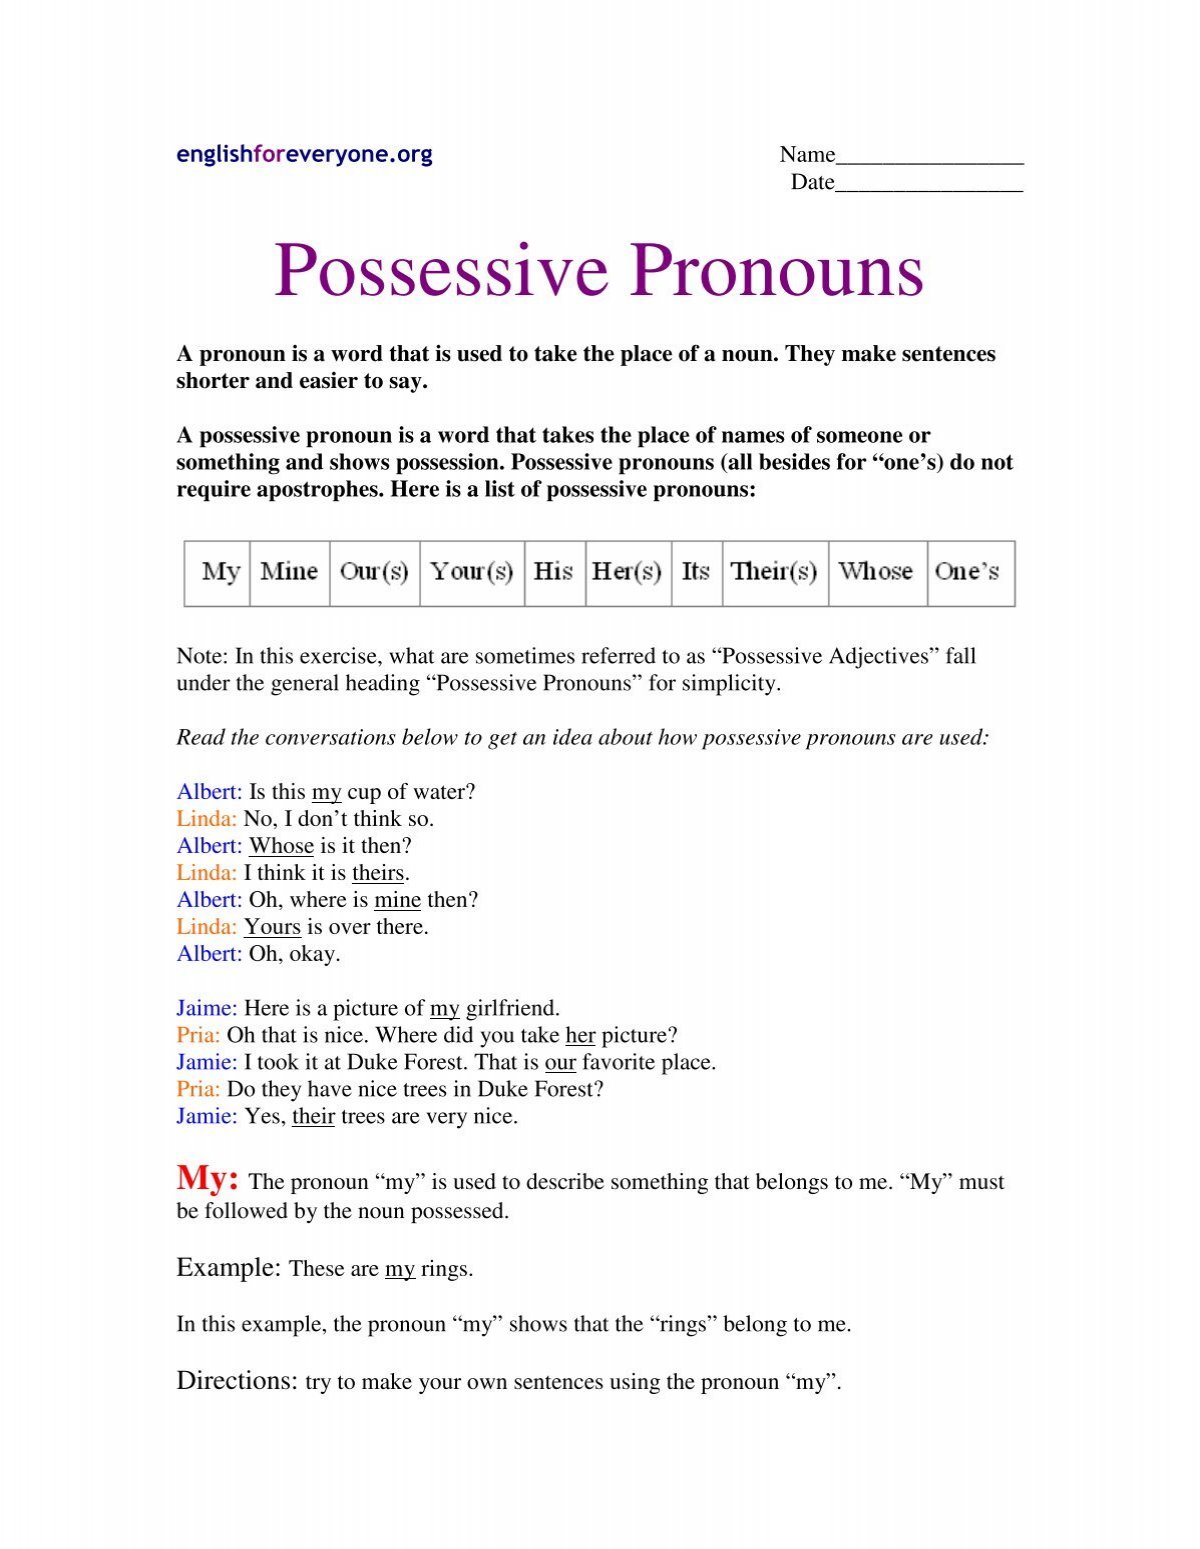 possessive-pronouns-english-for-everyone